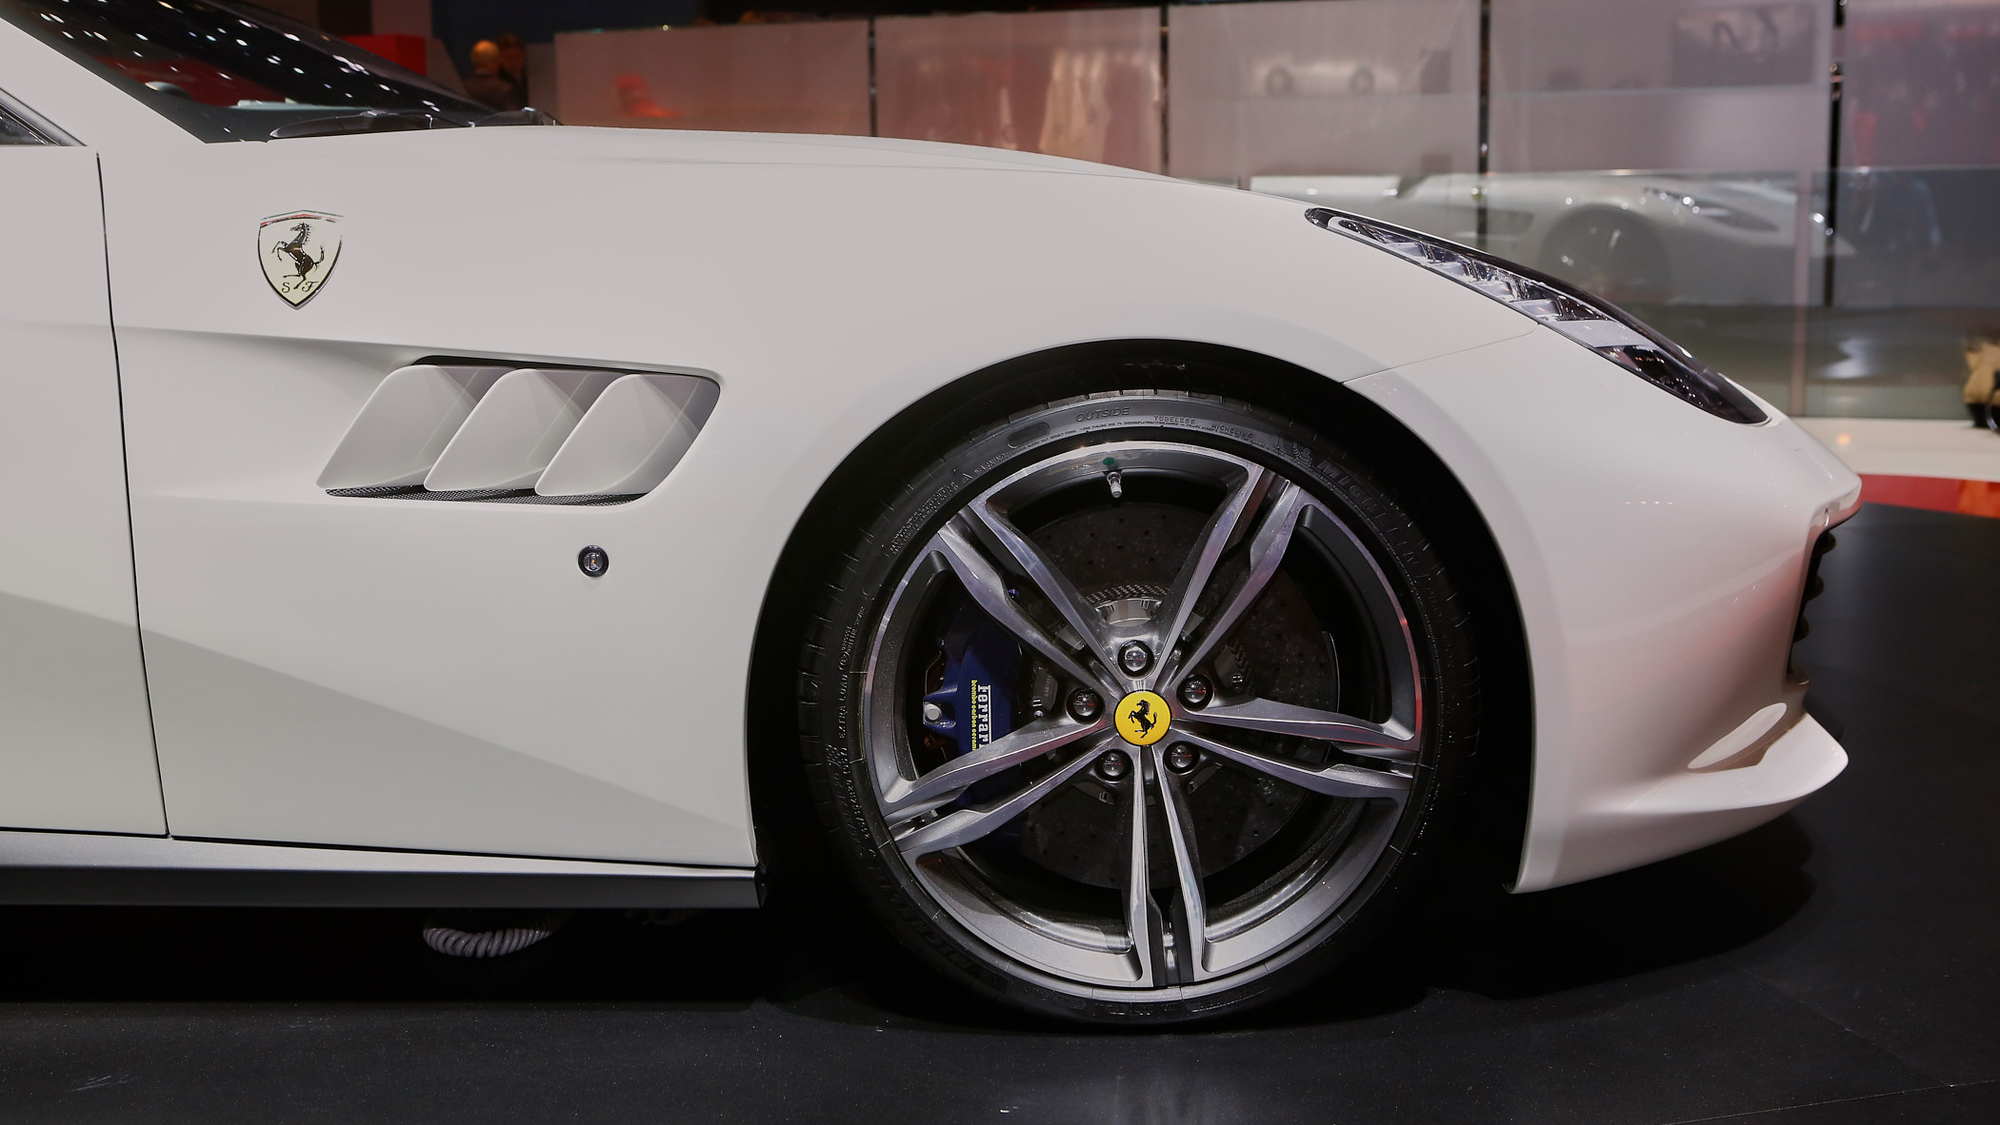 Ferrari GTC4 Lusso, 2016 Geneva Motor Show